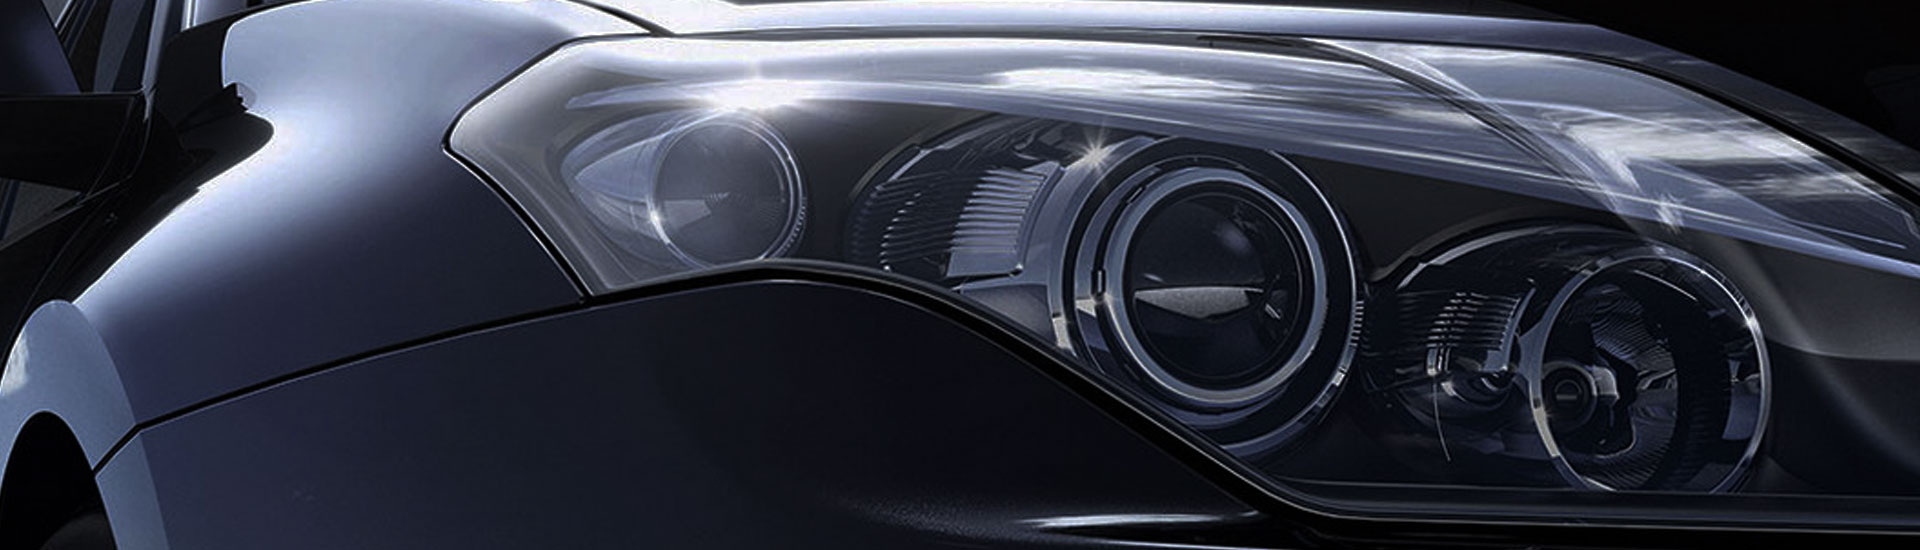 Aston Martin Vanquish Headlight Tint Covers